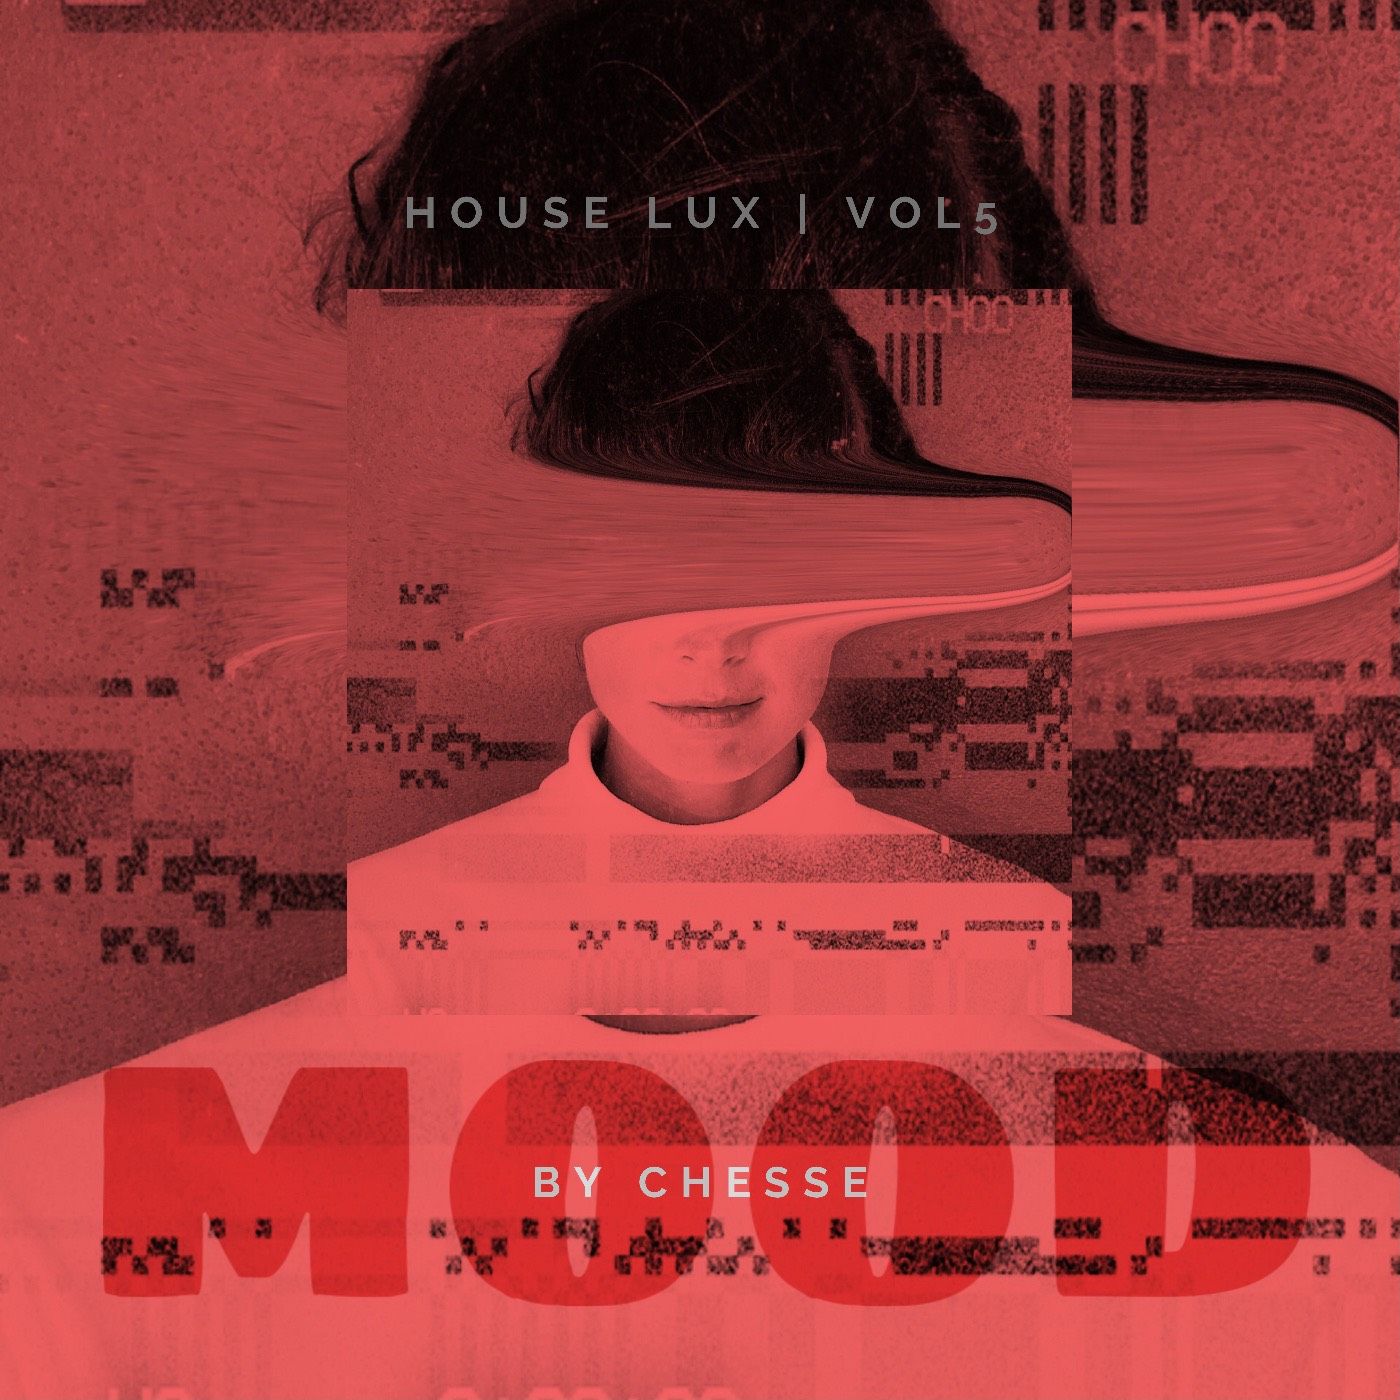 Descarregar MOOD - By Chesse - House lux #005